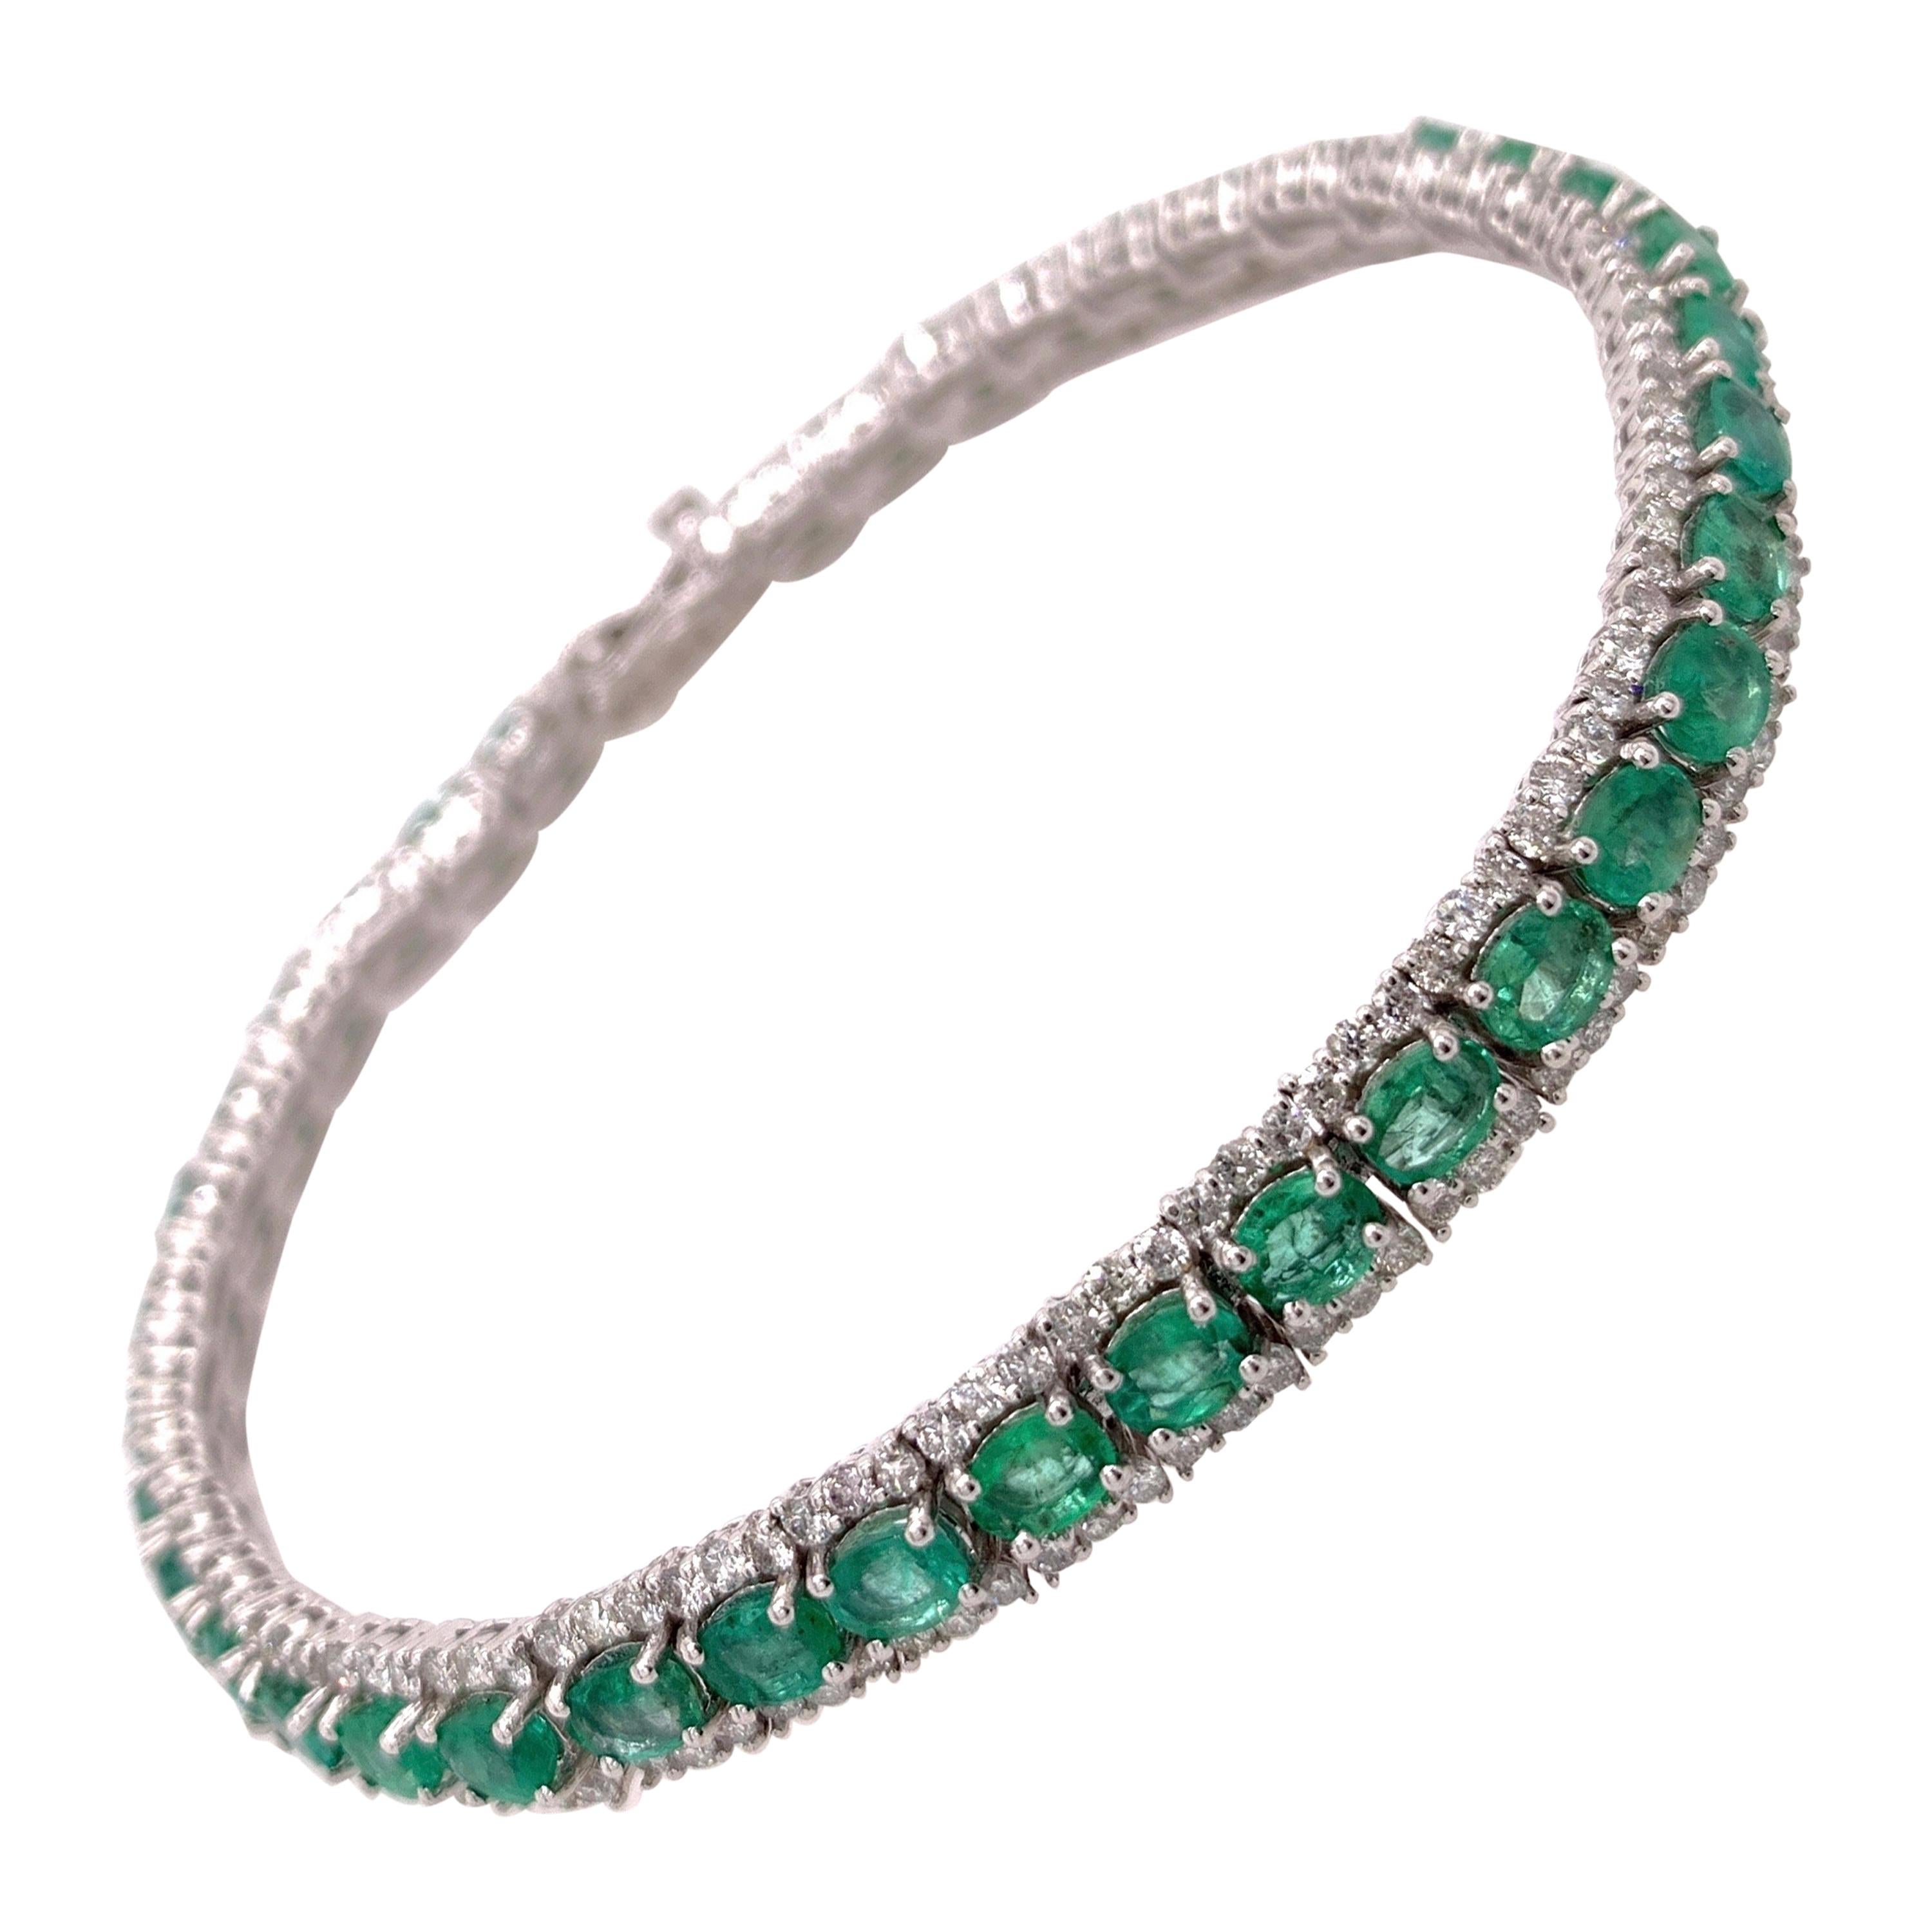 5.72 Carat Emerald Bangle Bracelet